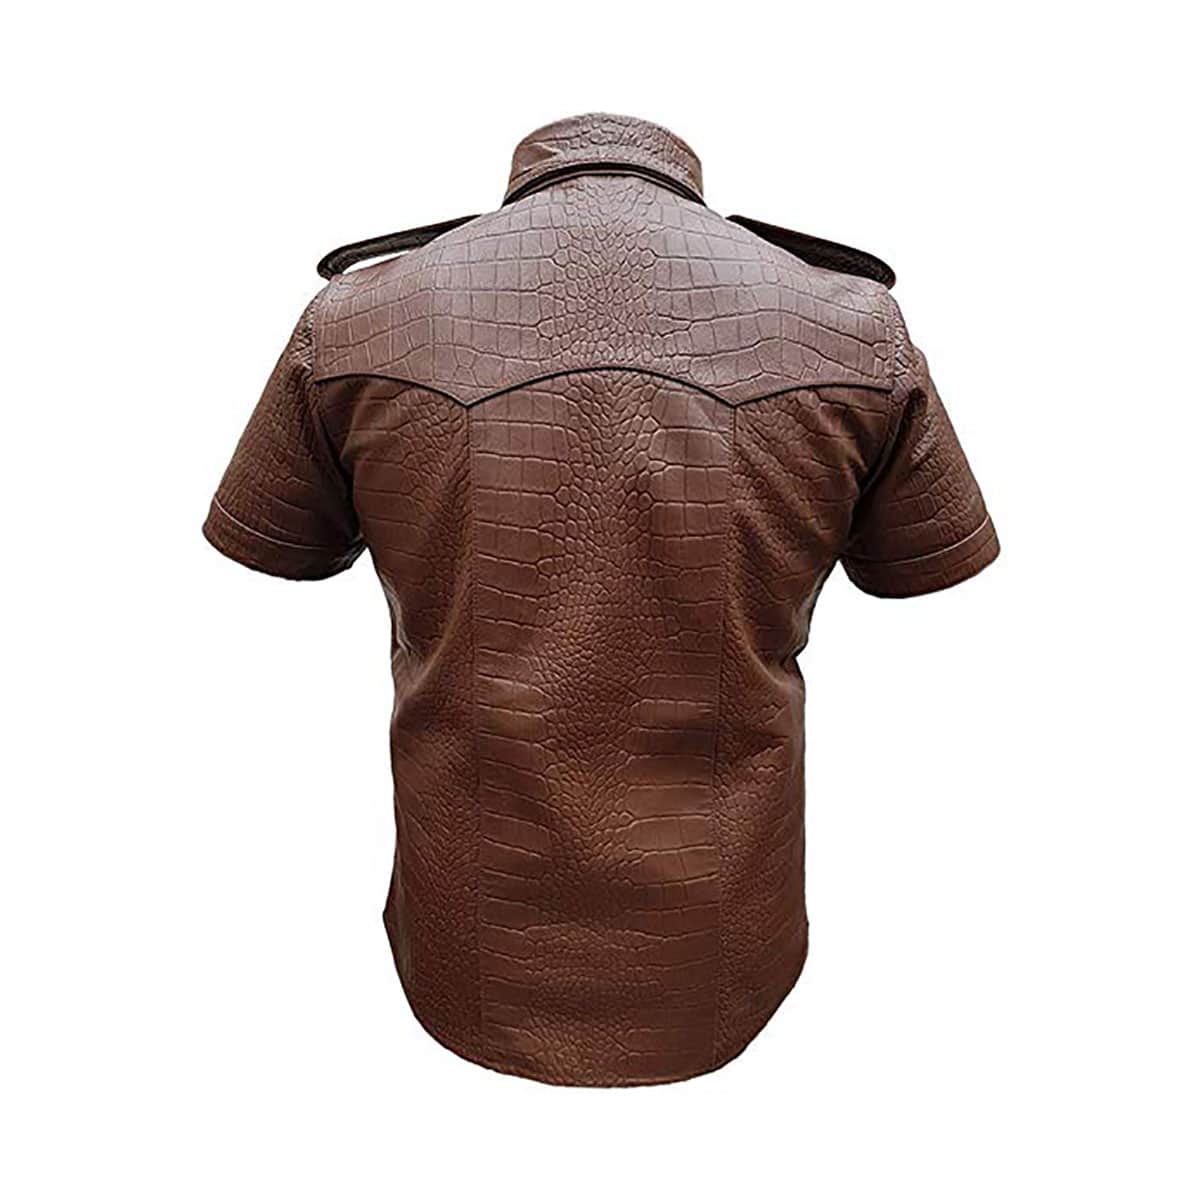 Men Brown Crocodile Print Leather Police Uniform Style Shirt - PSHS-CROC-BRW